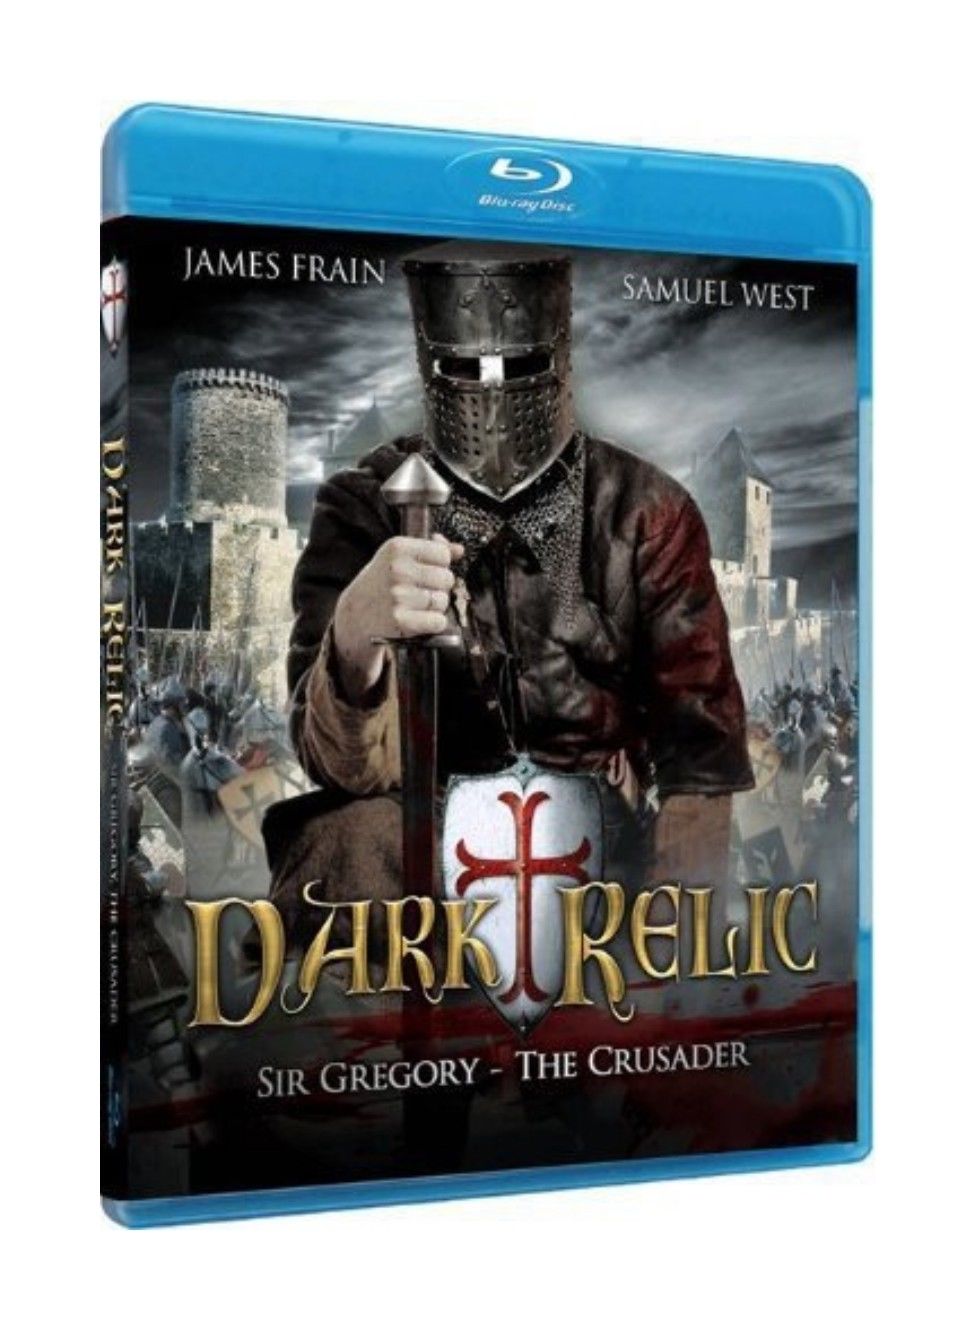 Dark Relic - Sir Gregory, The Crusader (Blu-ray, 2012) New